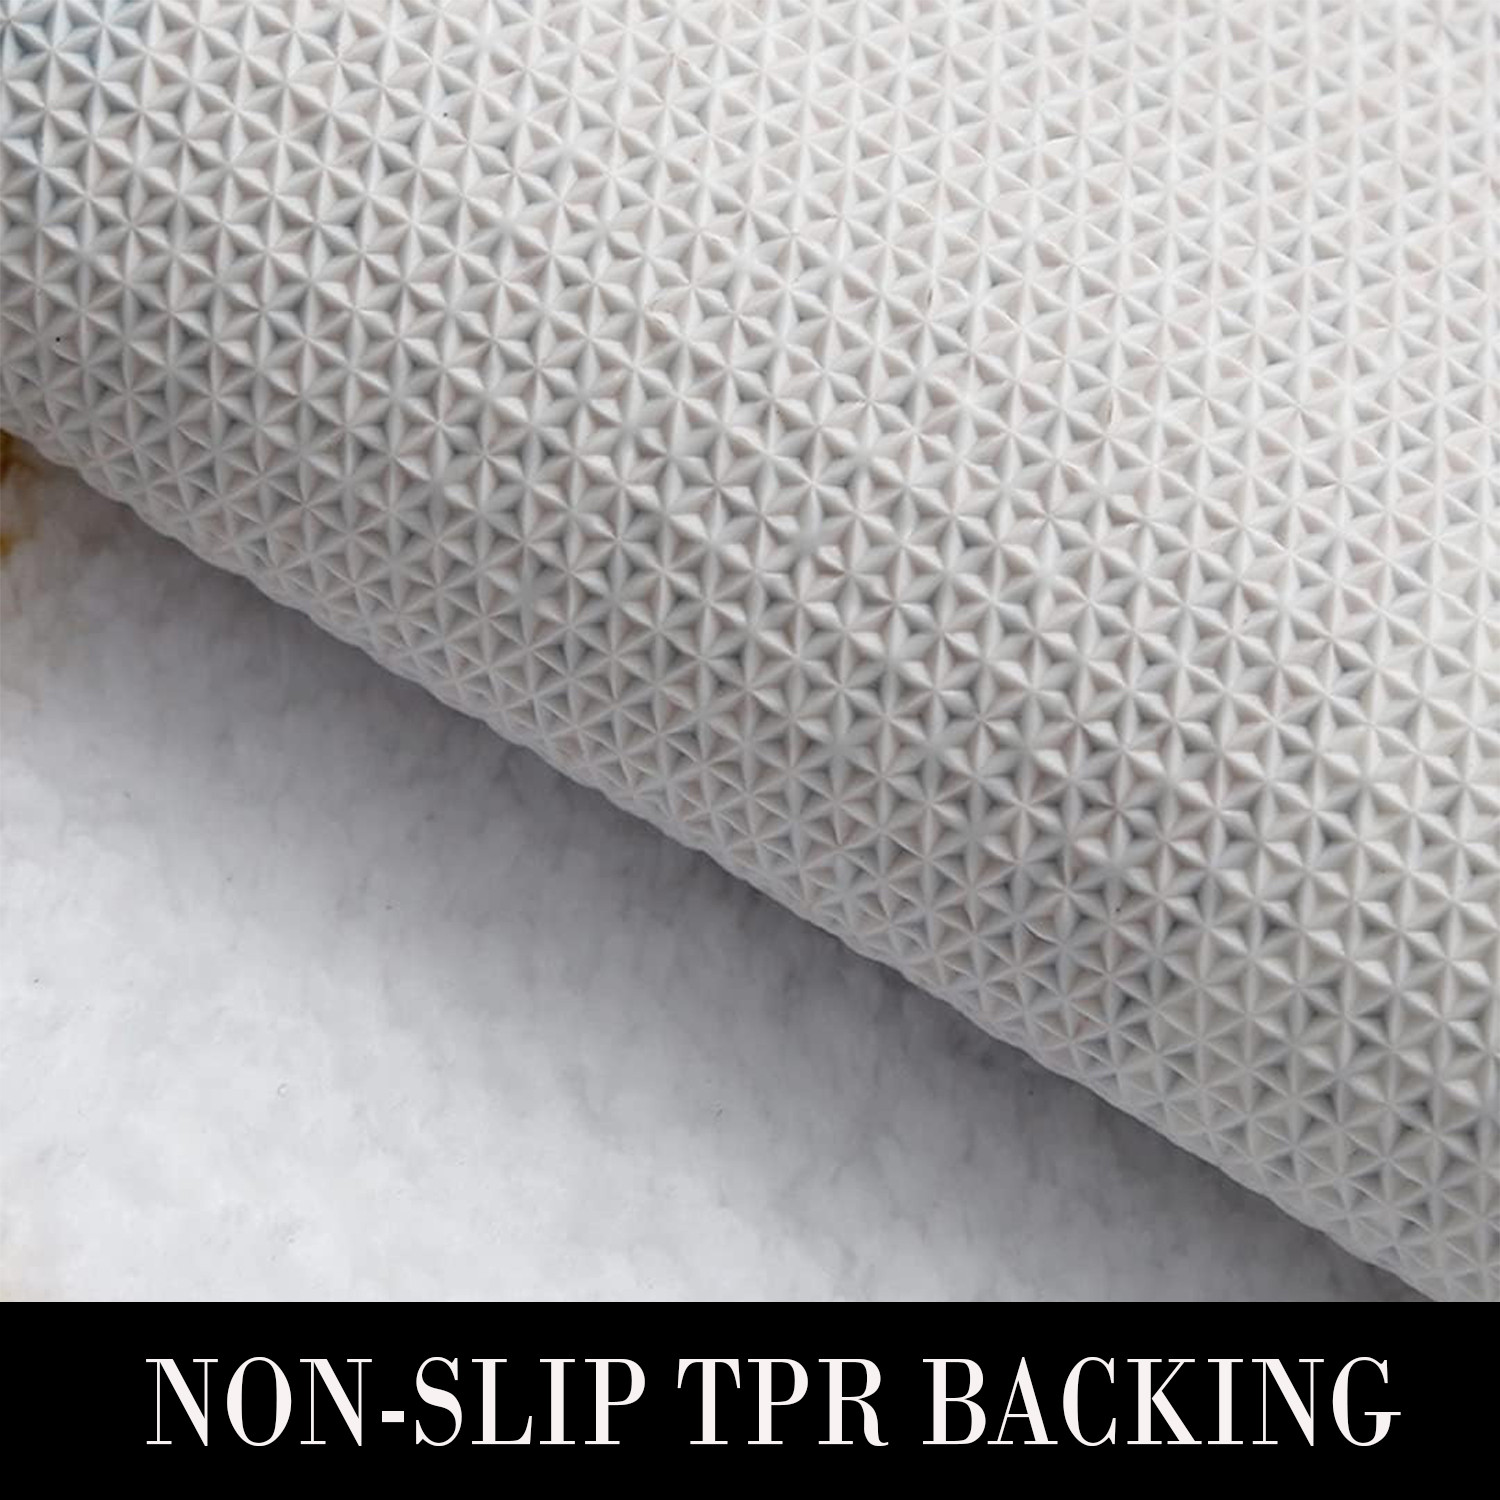 Kuber Industries Soft Bathroom Mat|Anti-Slip Mat For Bathroom Floor|Leaf Design With TPR Backing|Foot Mats For Home, Living Room, Bedroom (Multi)